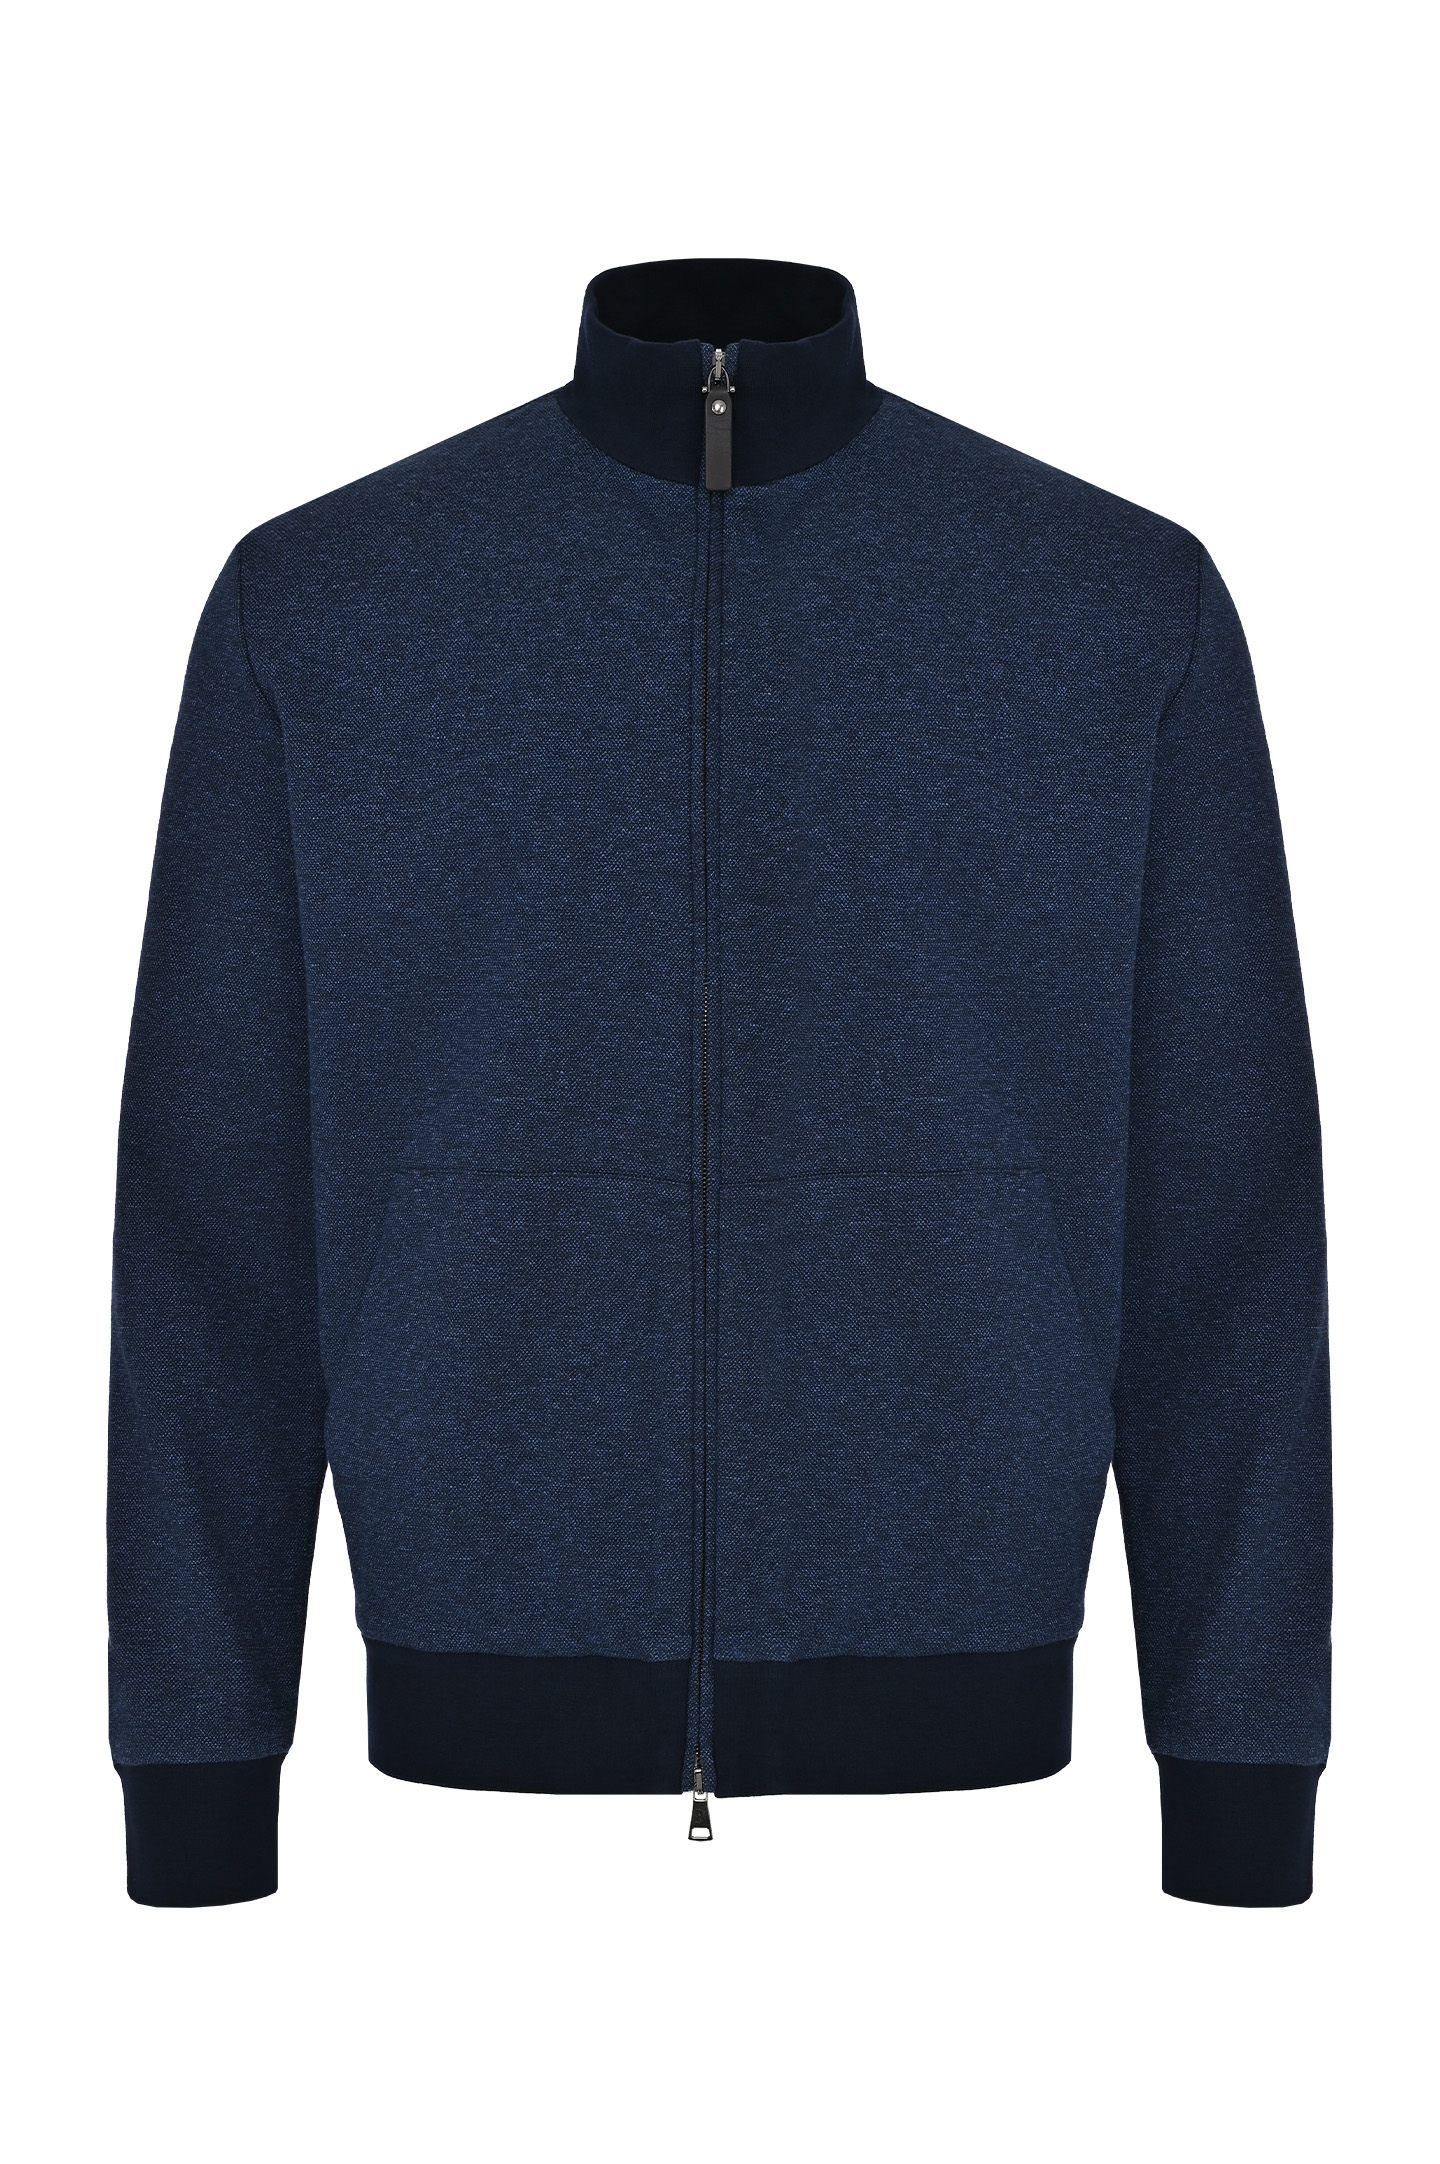 Спортивная хлопковая куртка CANALI MJ02044 T0820, цвет: Темно-синий, Мужской